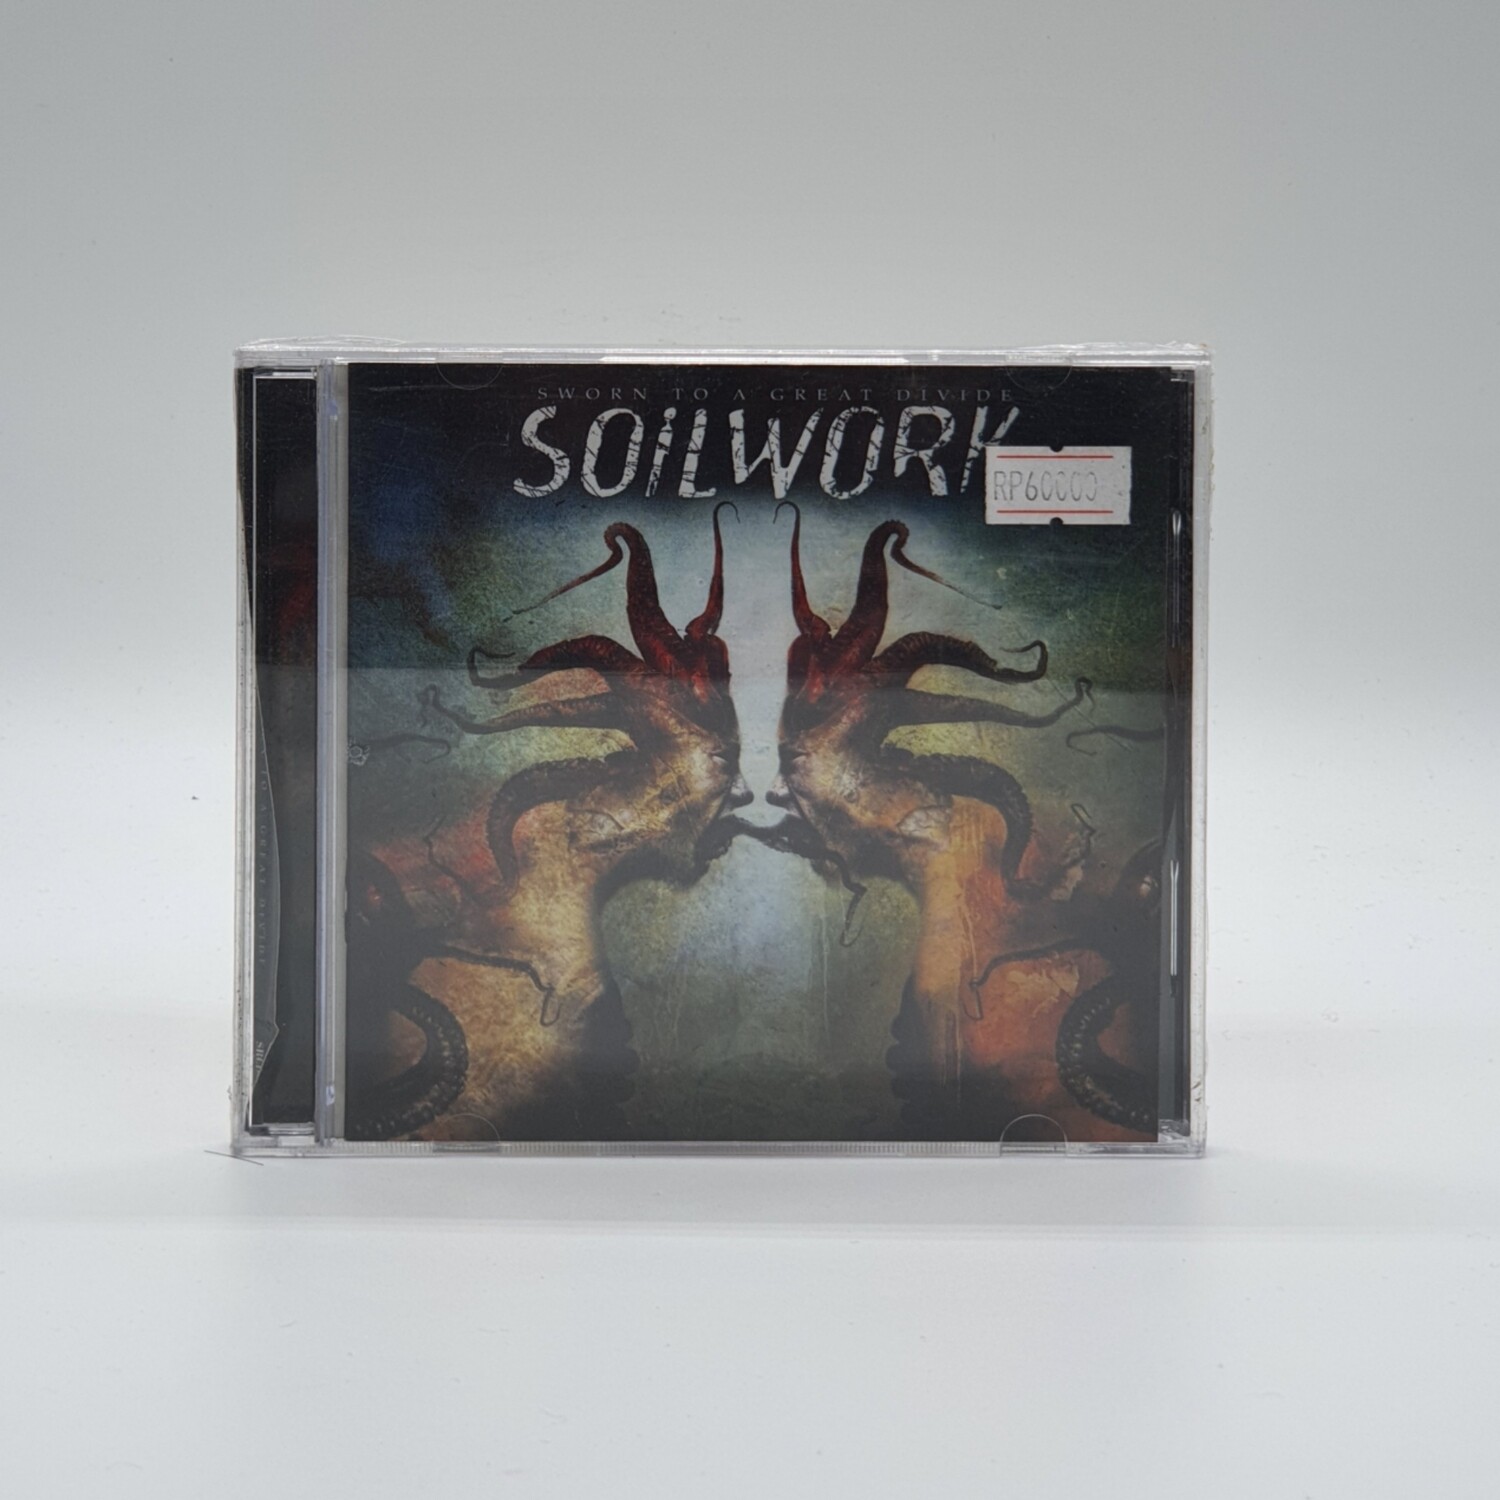 SOILWORK -SWORN TO A GREAT DEVIDE- CD